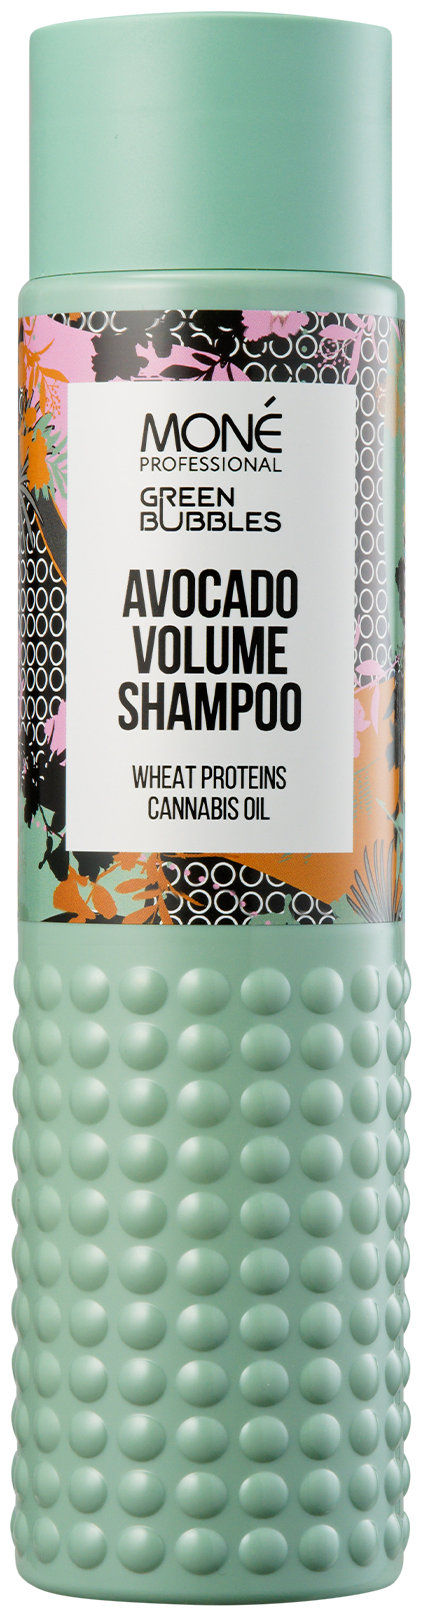 MONE PROFESSIONAL Avocado Volume Shampoo Шампунь для объема волос с маслом авокадо, 300 мл